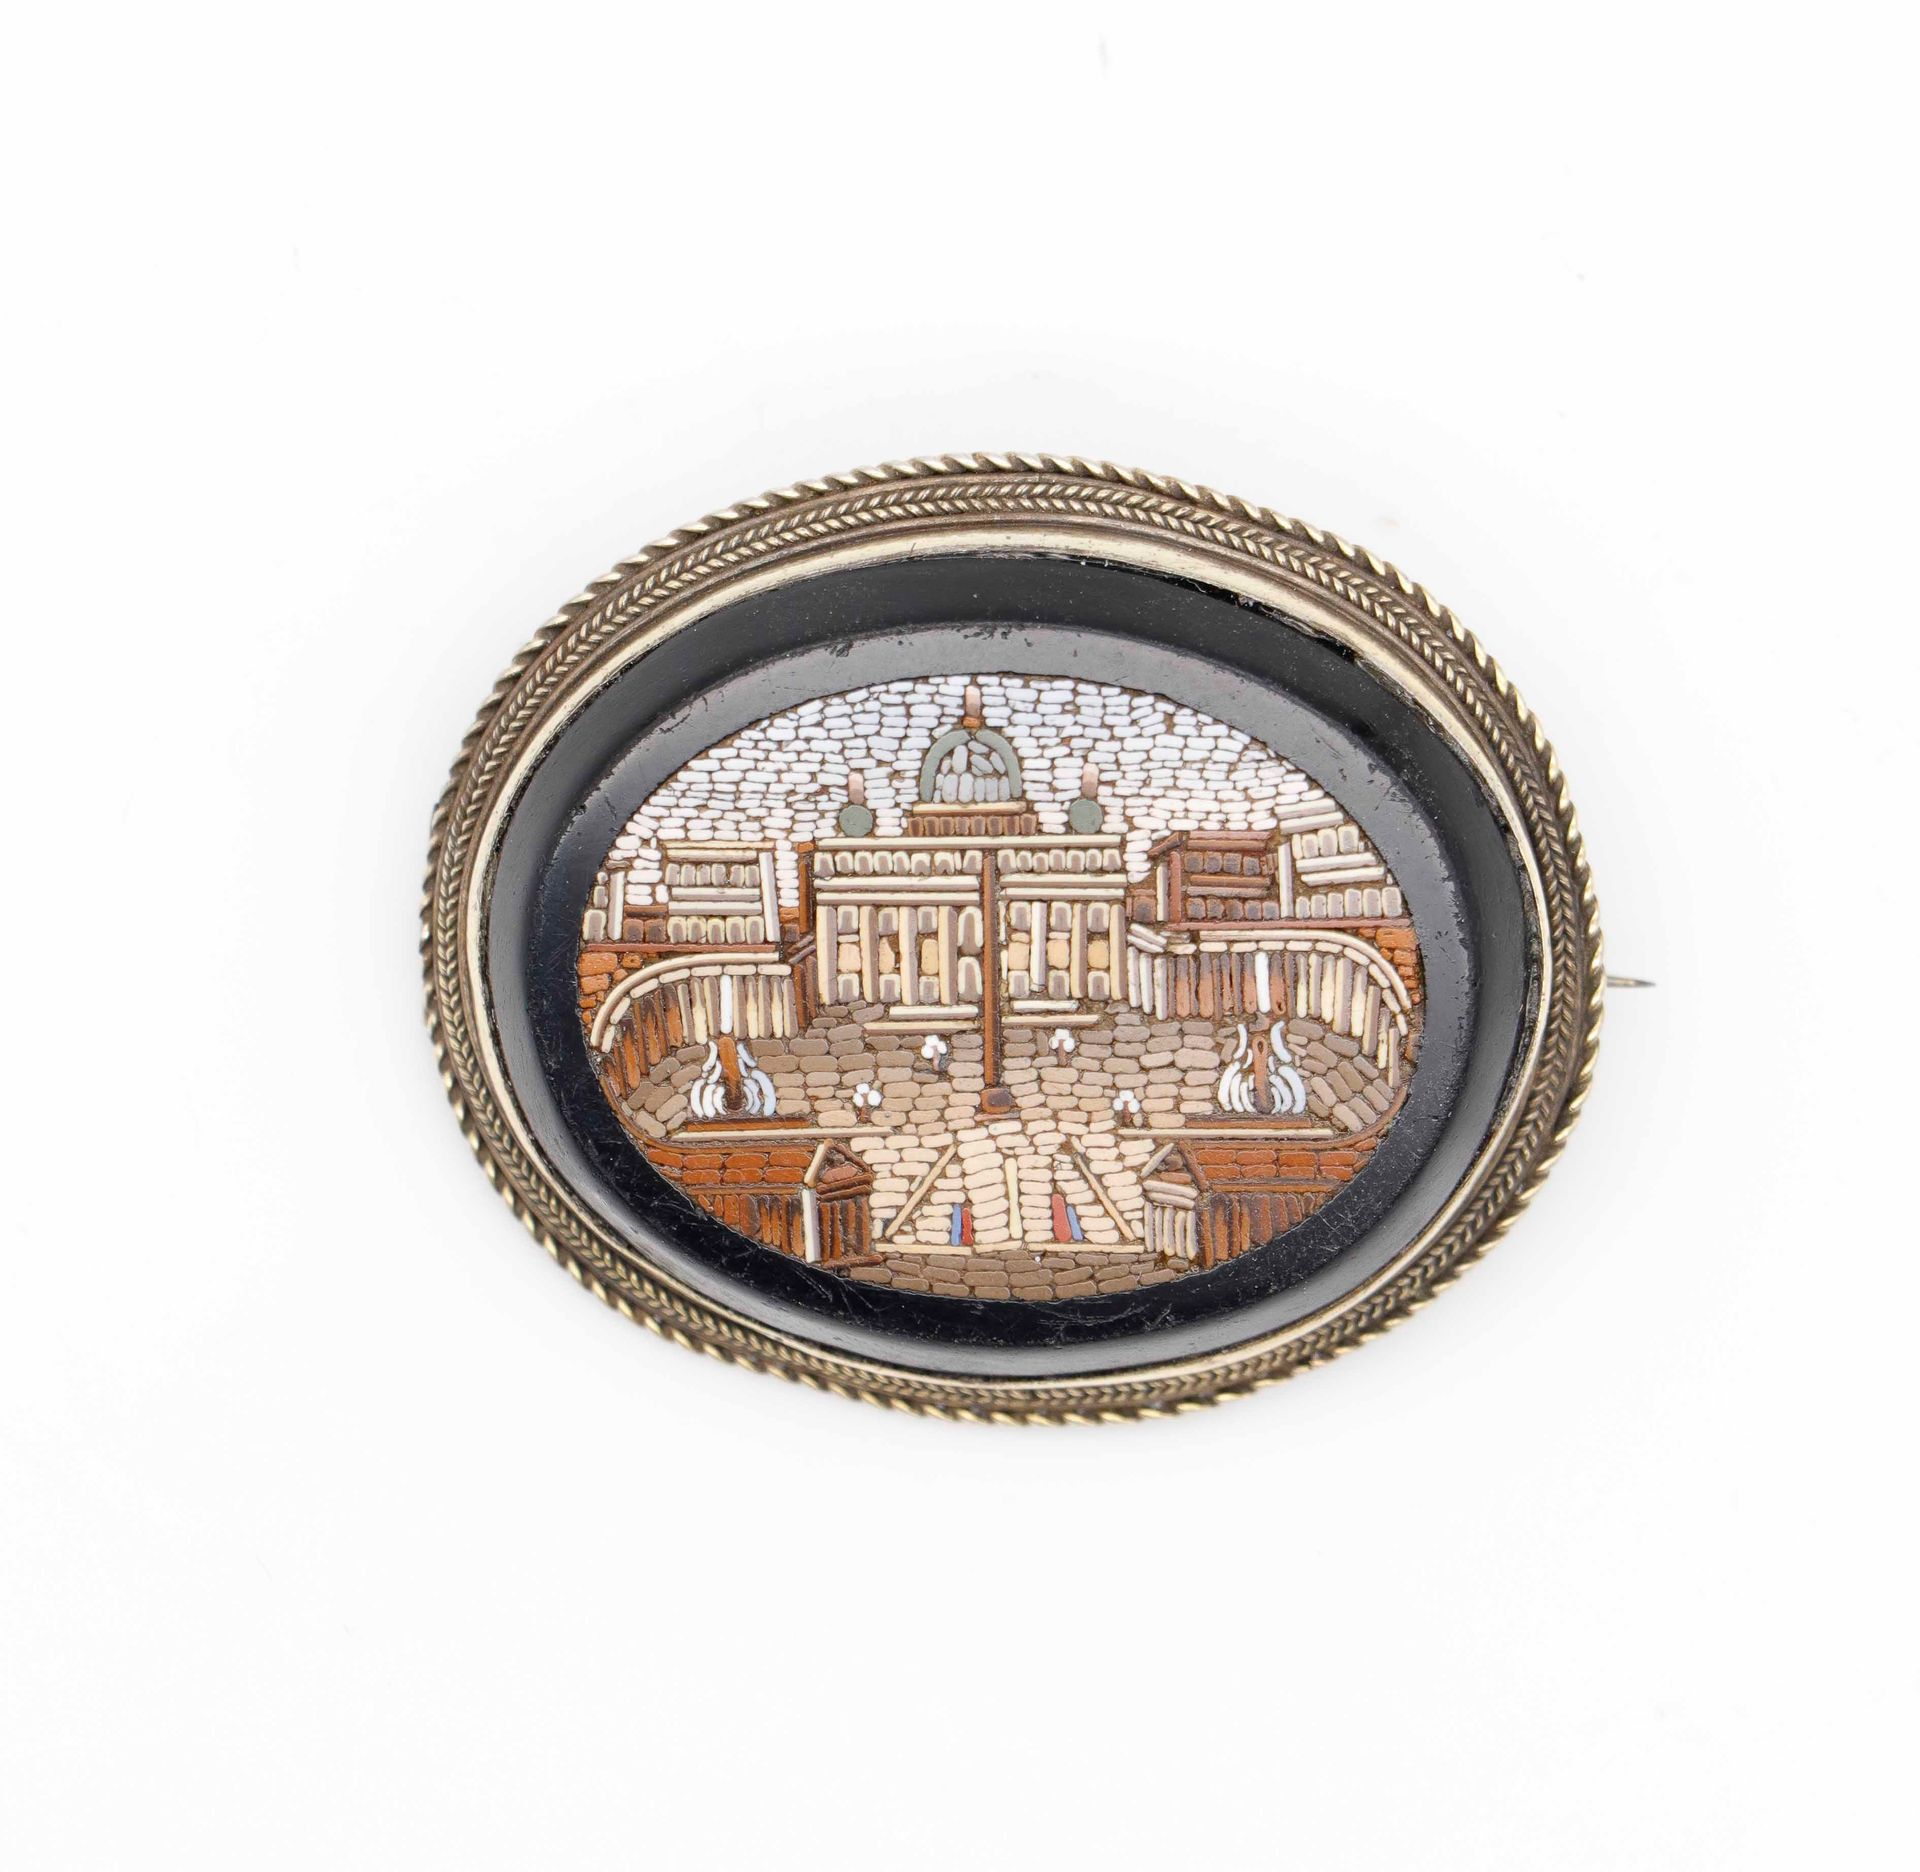 Null 椭圆形胸针上装饰有代表圣彼得广场的微型马赛克。